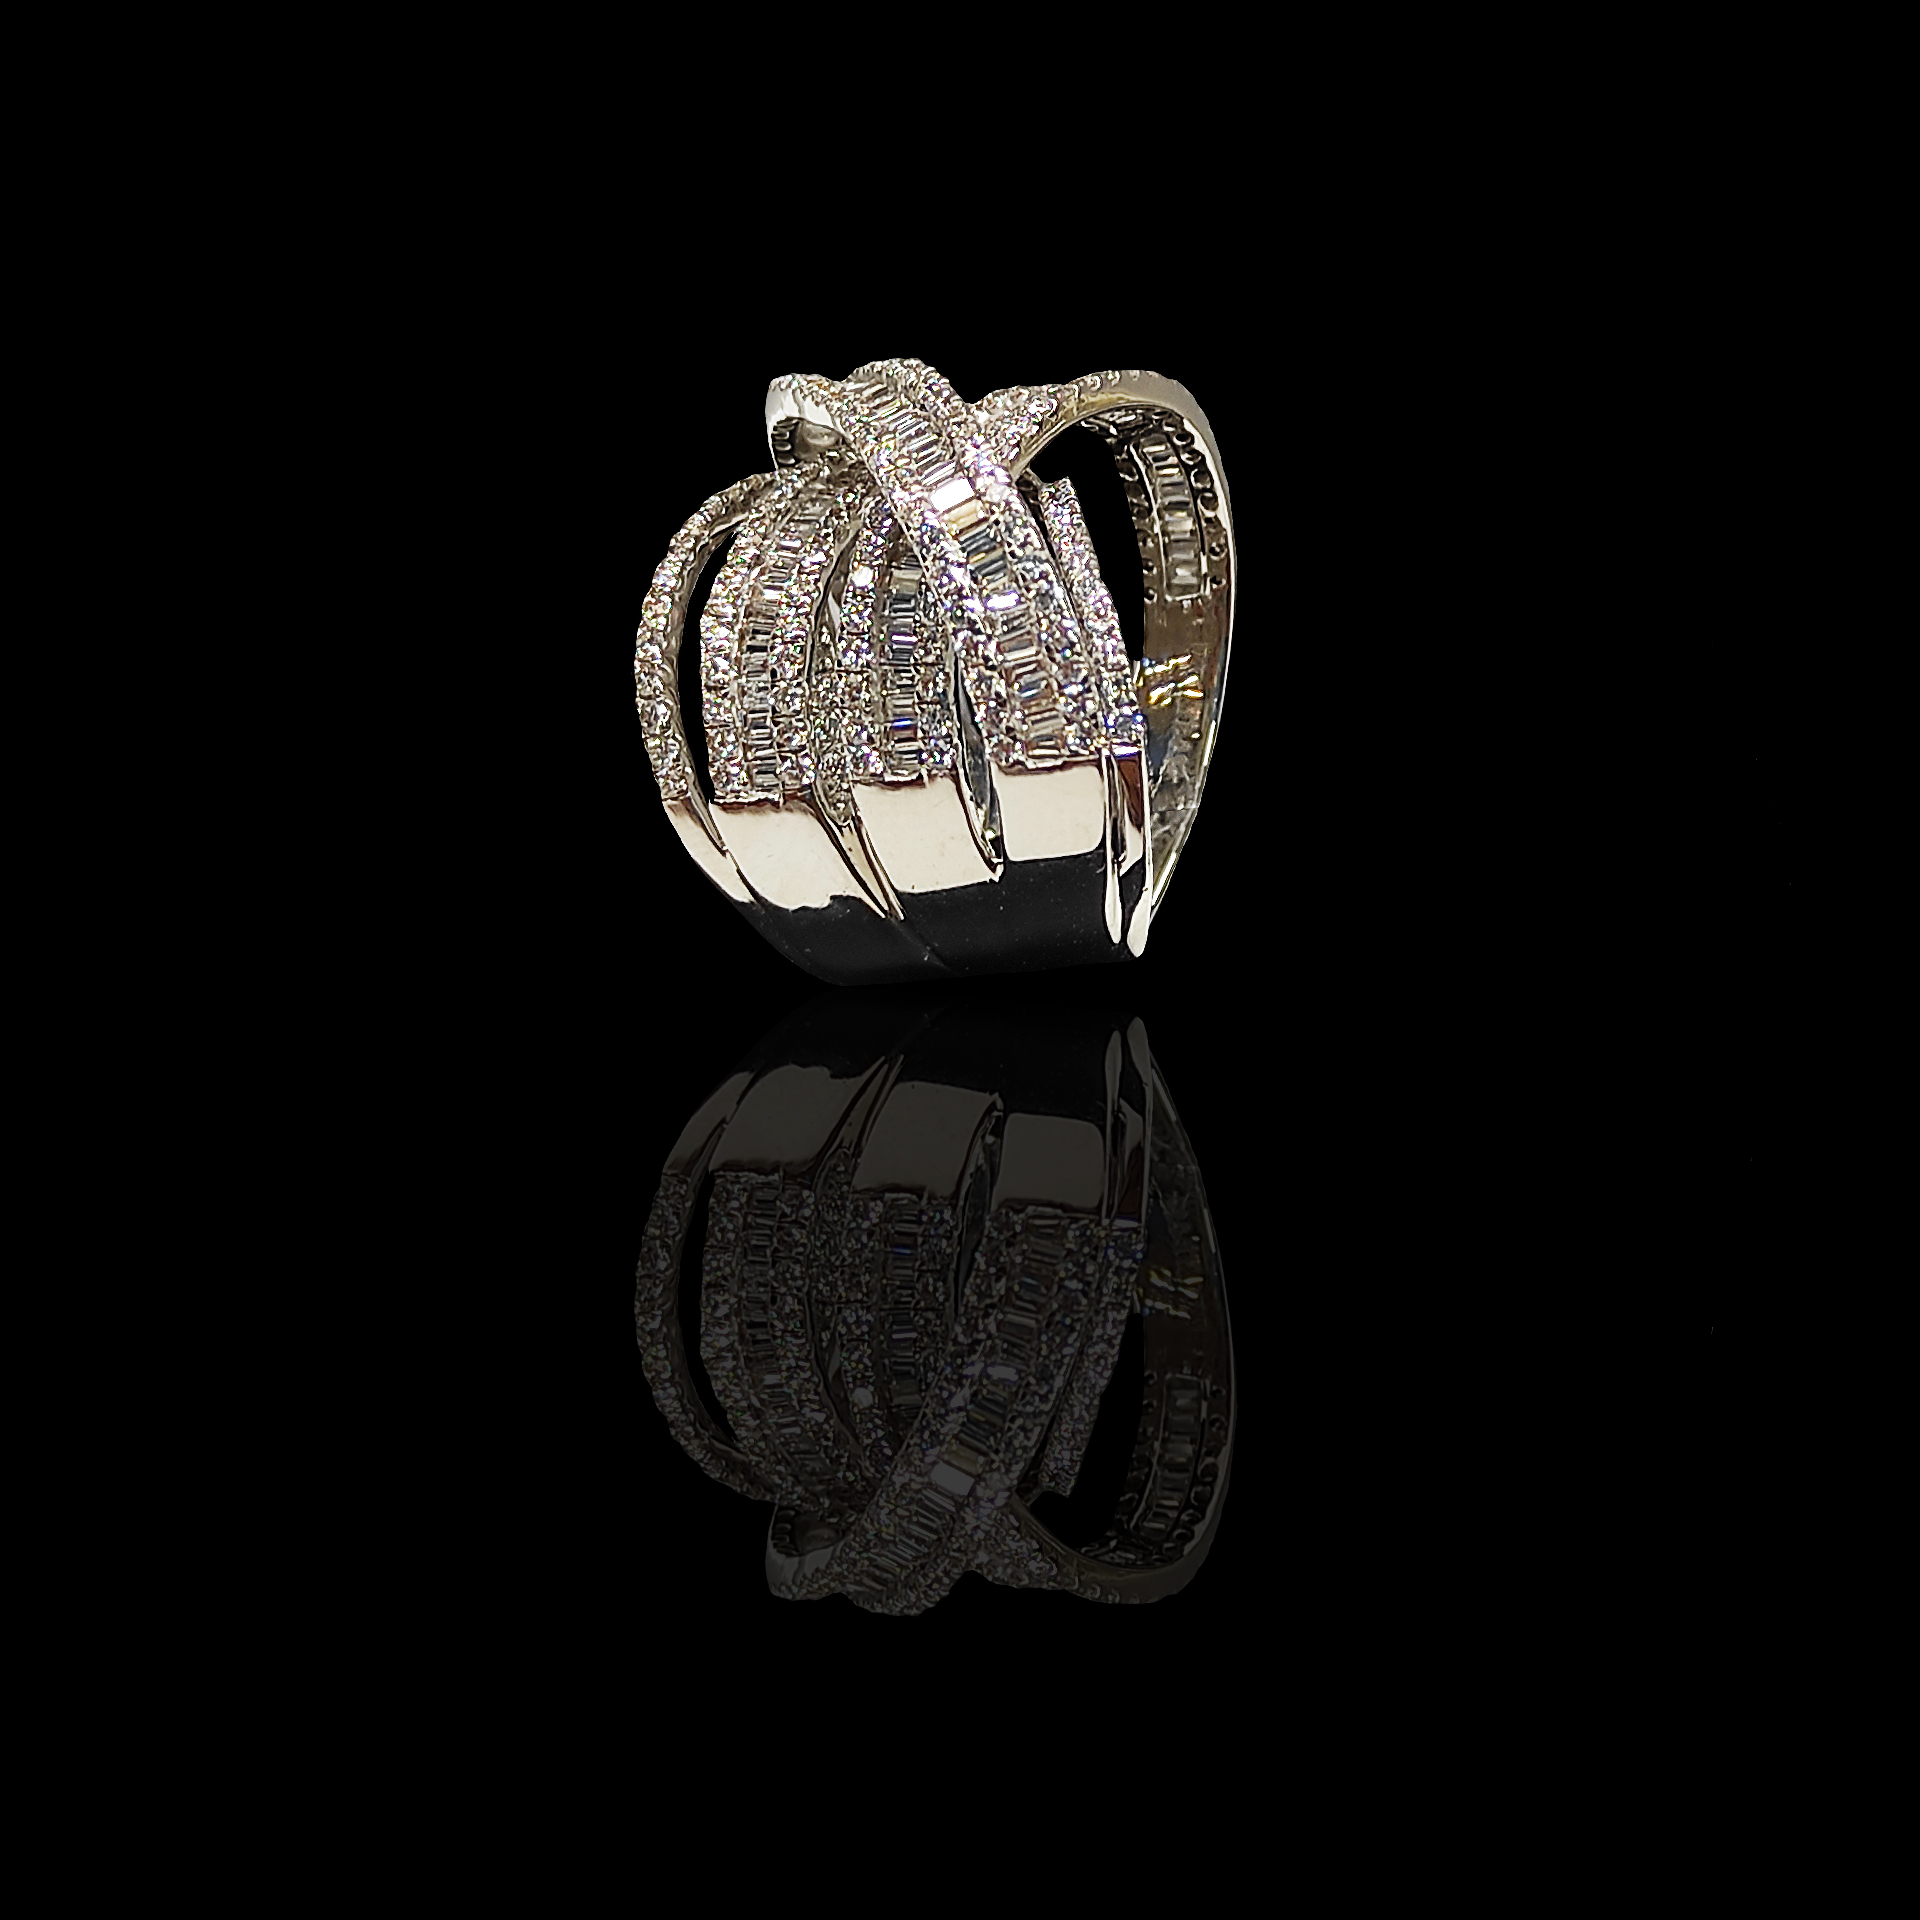 The Criss-Cross Cocktail Diamond Ring